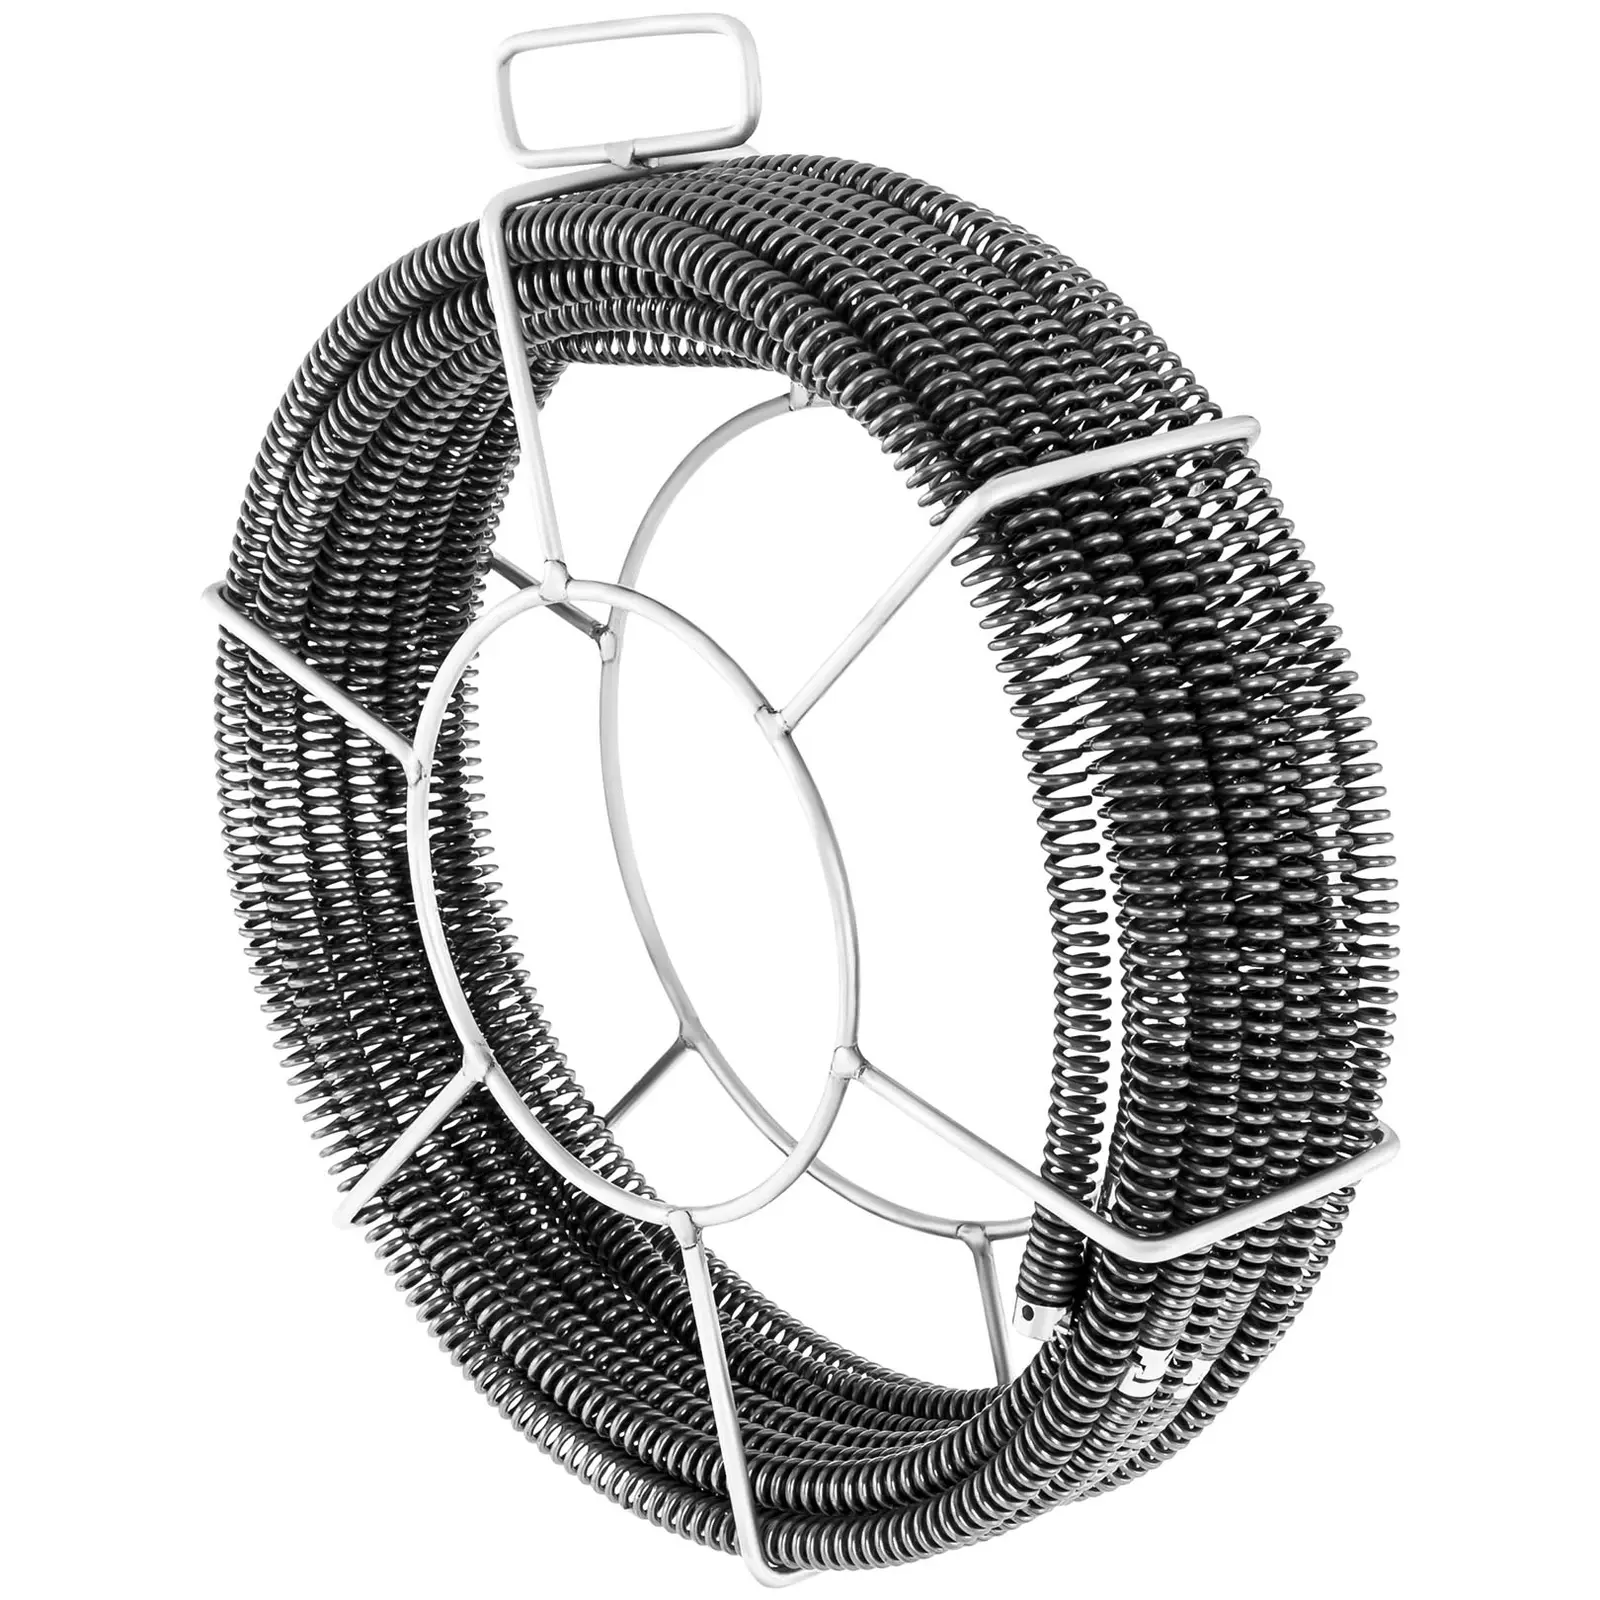 Spirales de plomberie - Lot de 5 x 2,3 m/ Ø 16 mm + 1 x 2,4 m/ Ø 15 mm